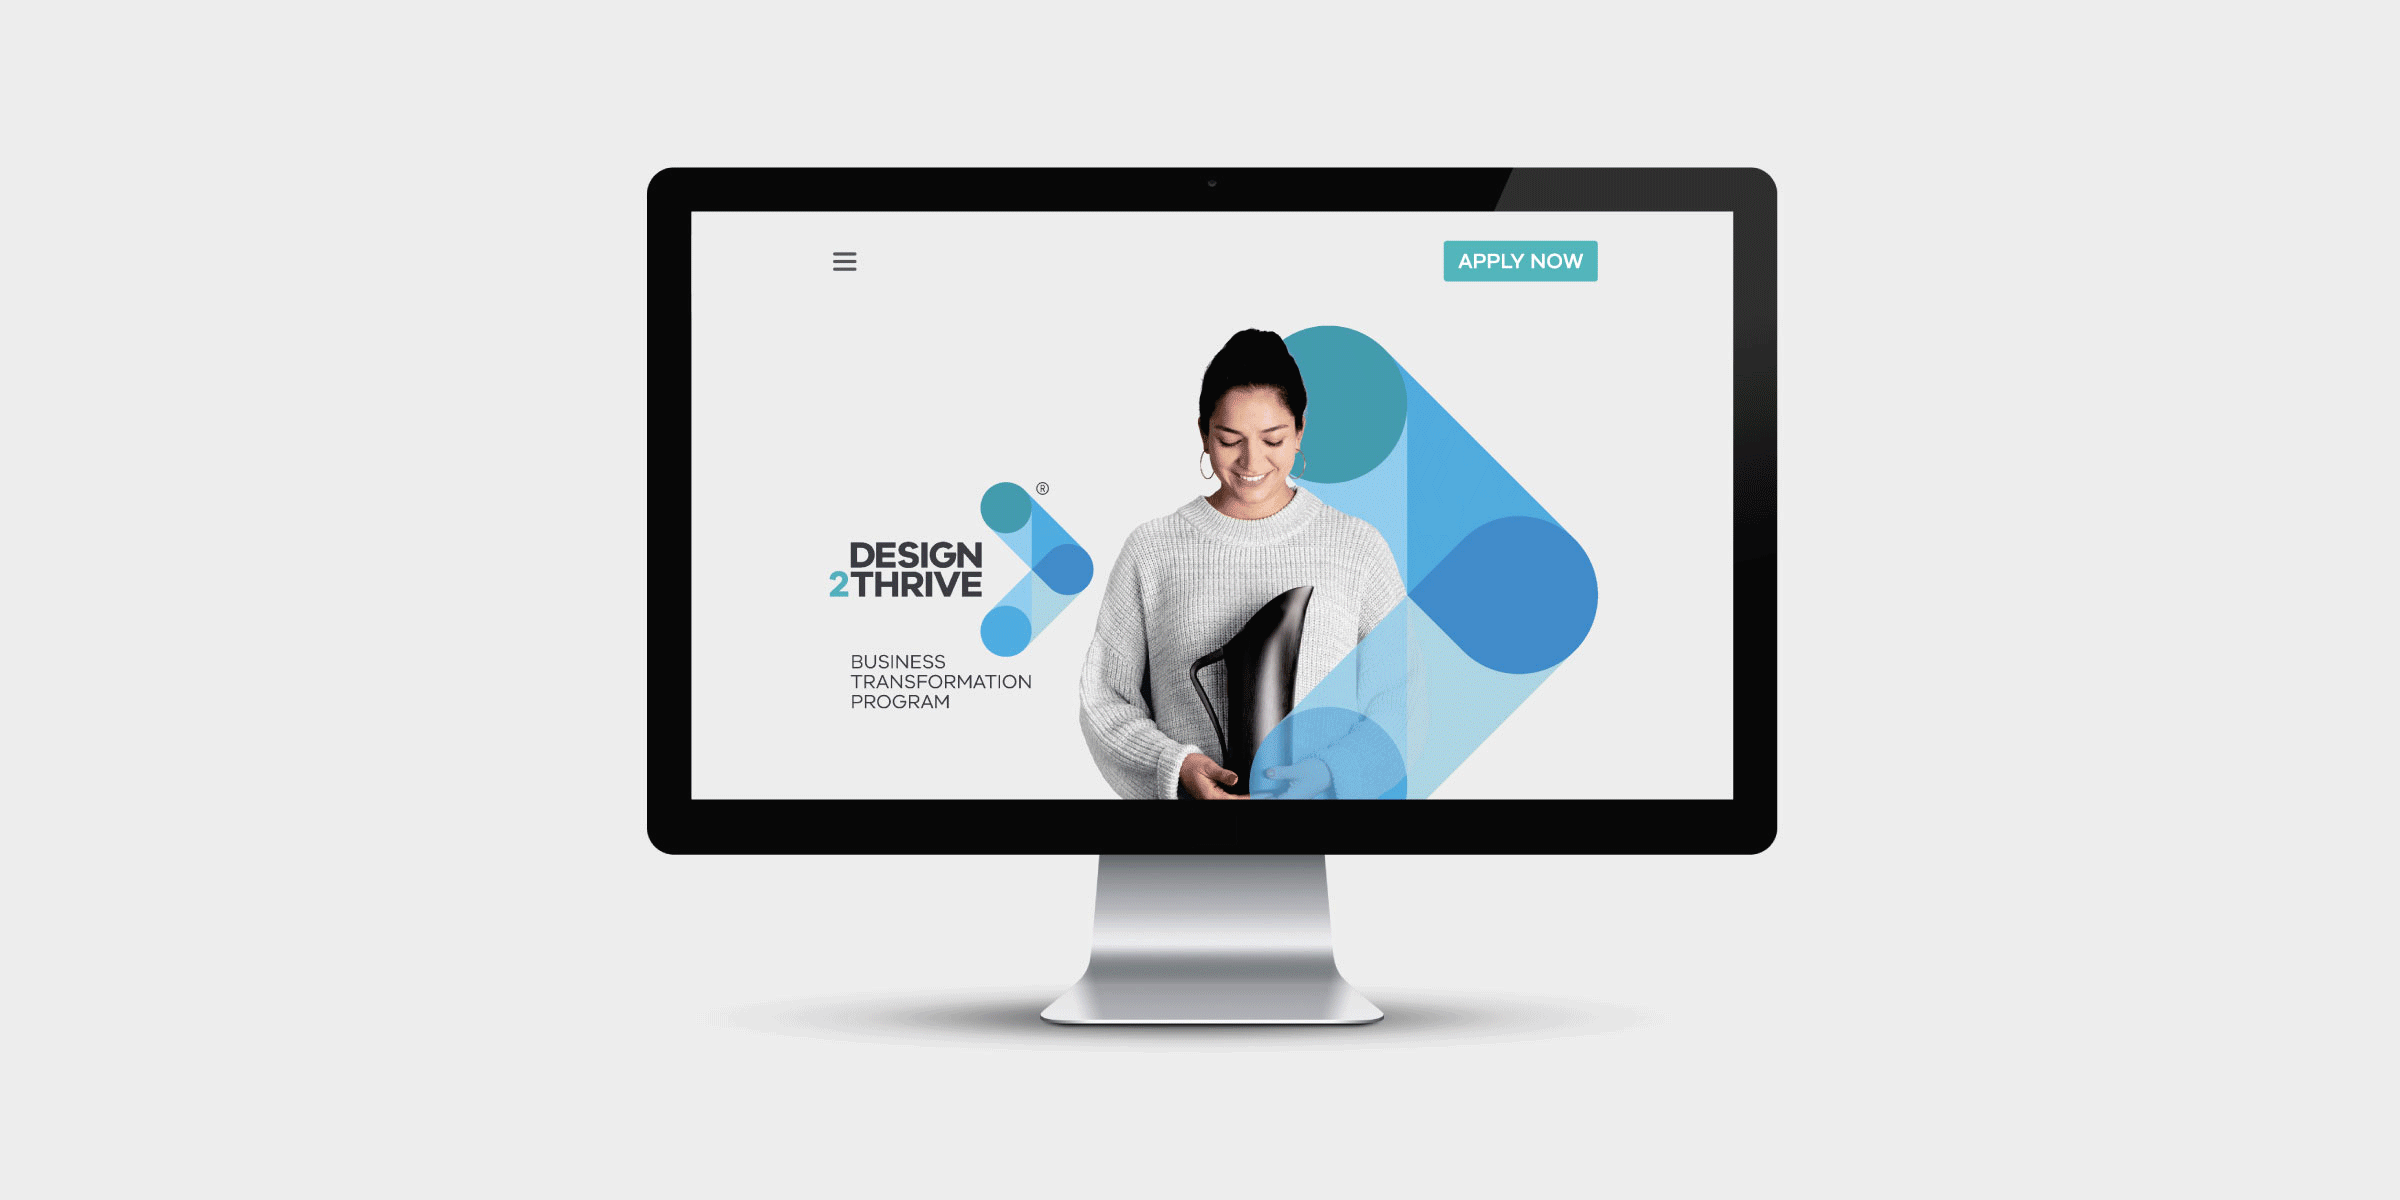 Design2Thrive Digital Website